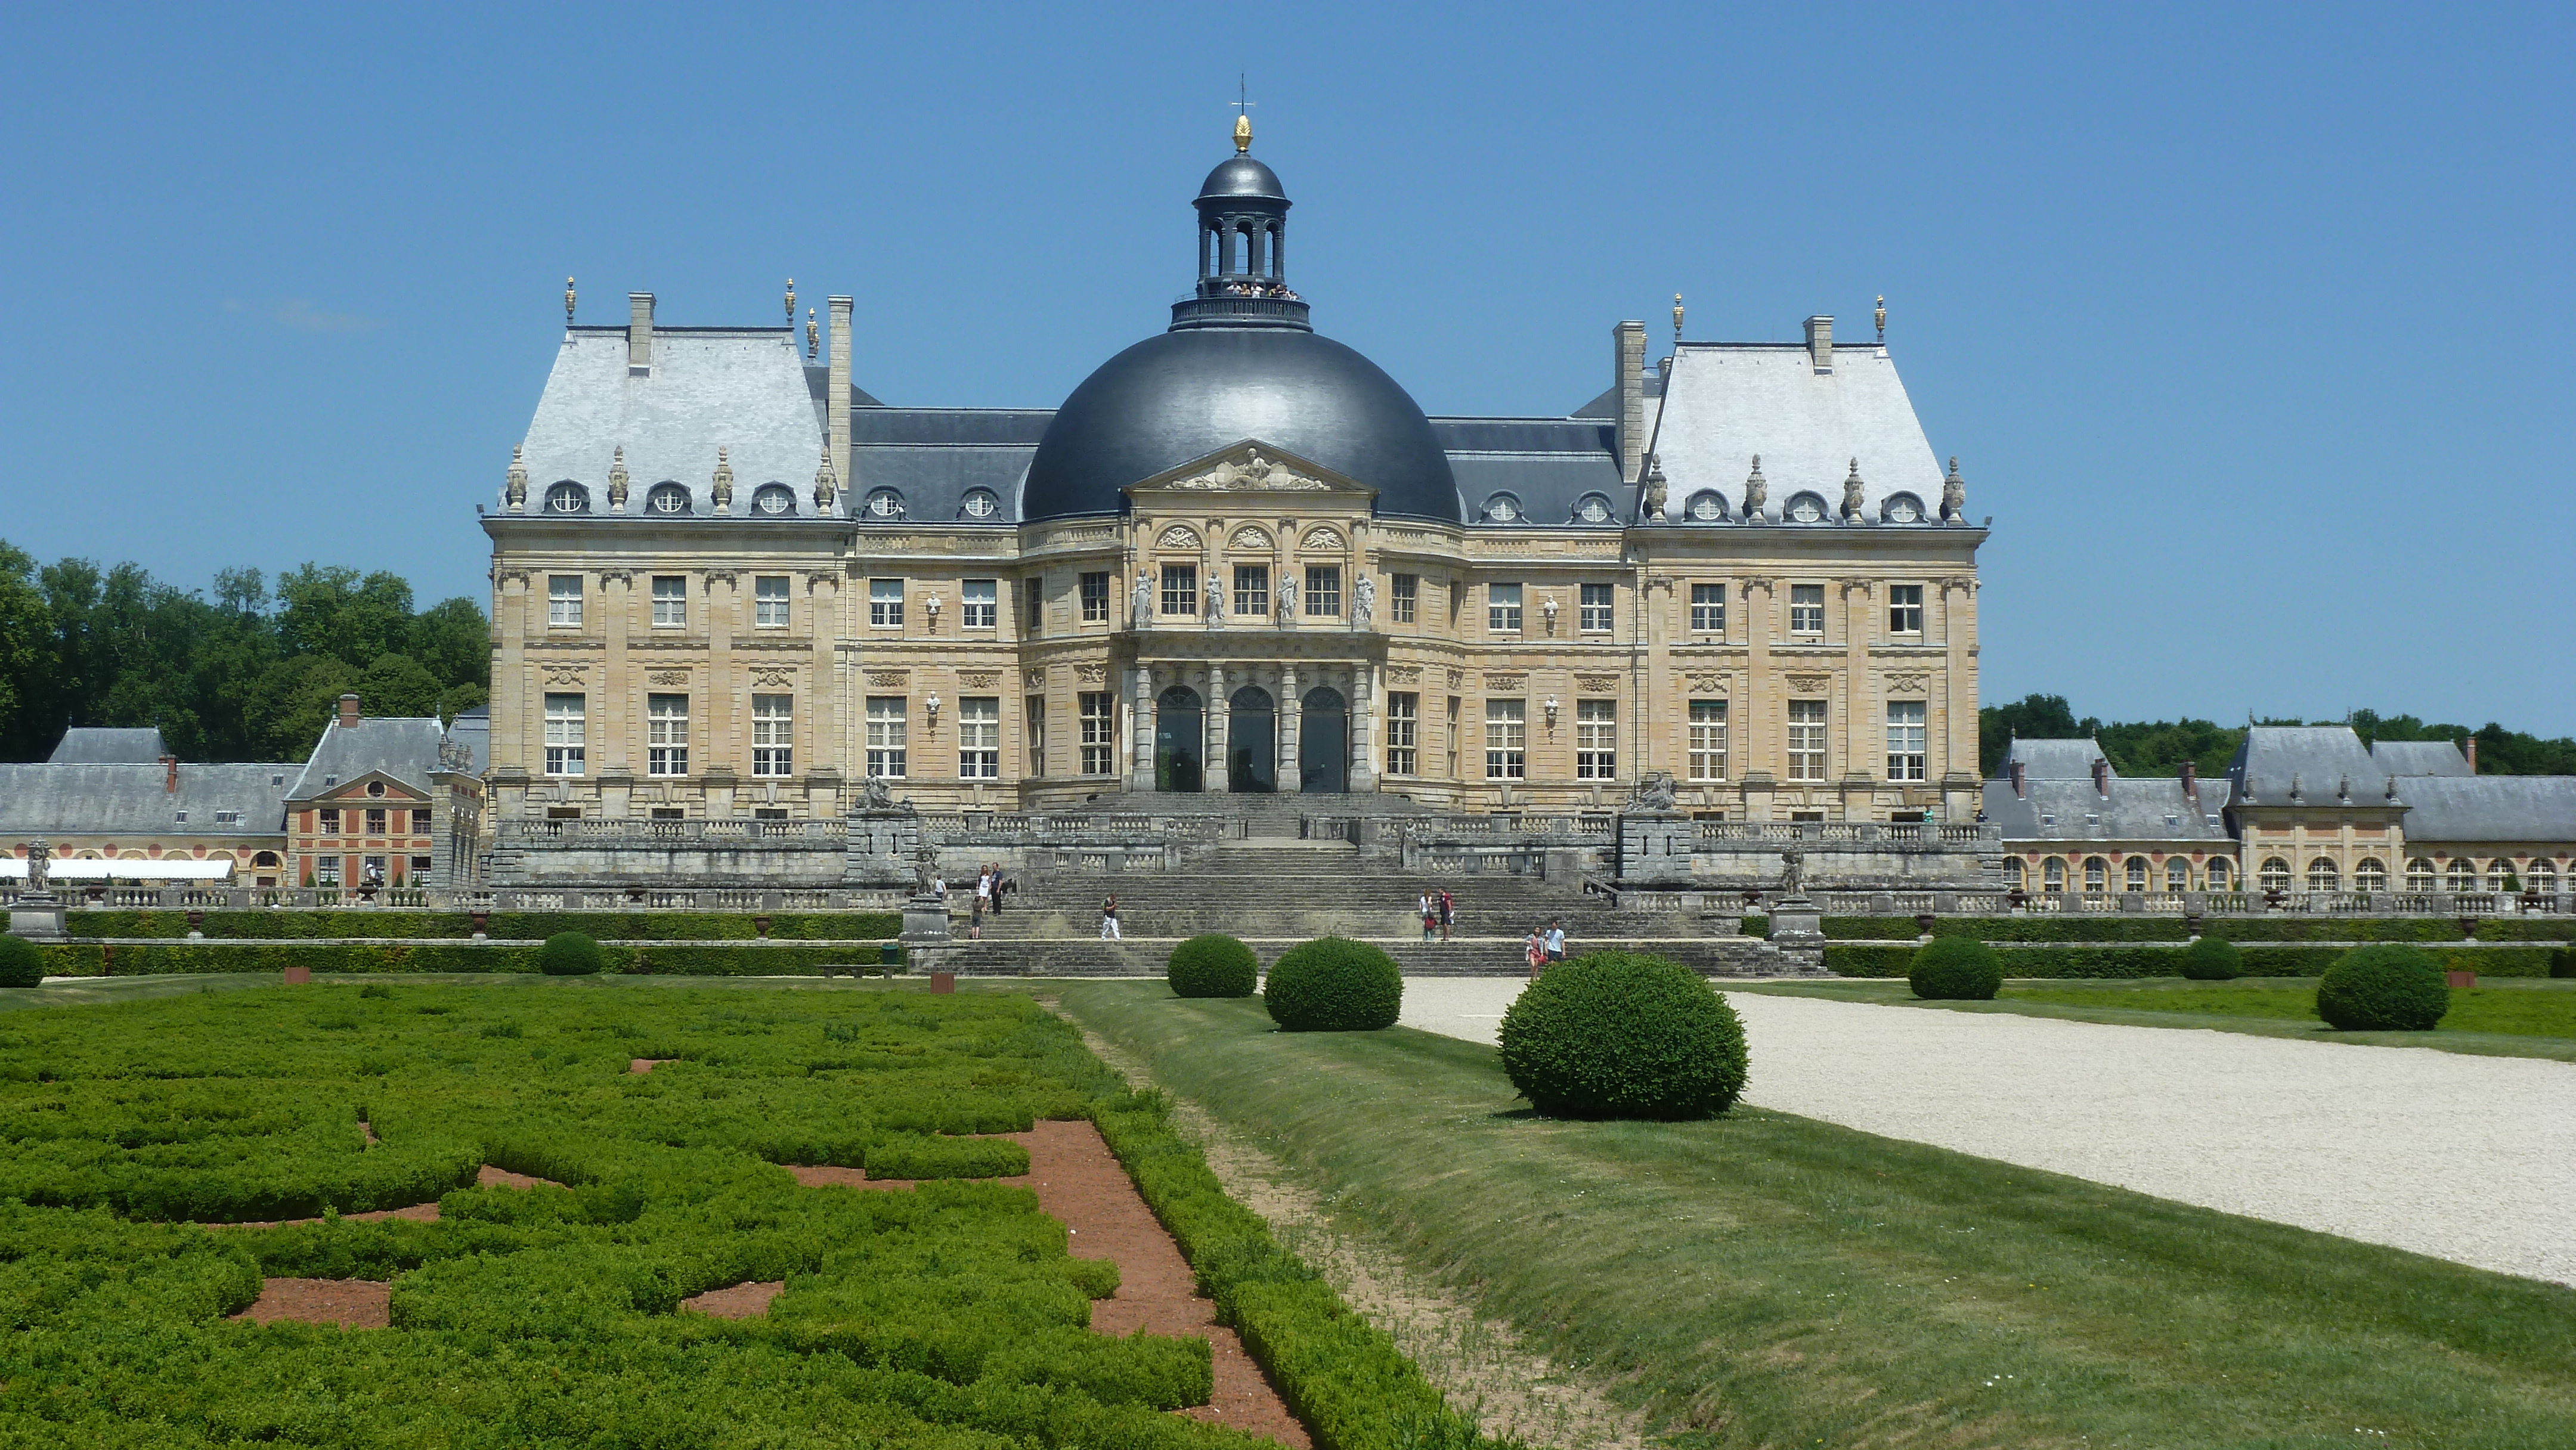 Vaux-le-Vicomte - Wikipedia